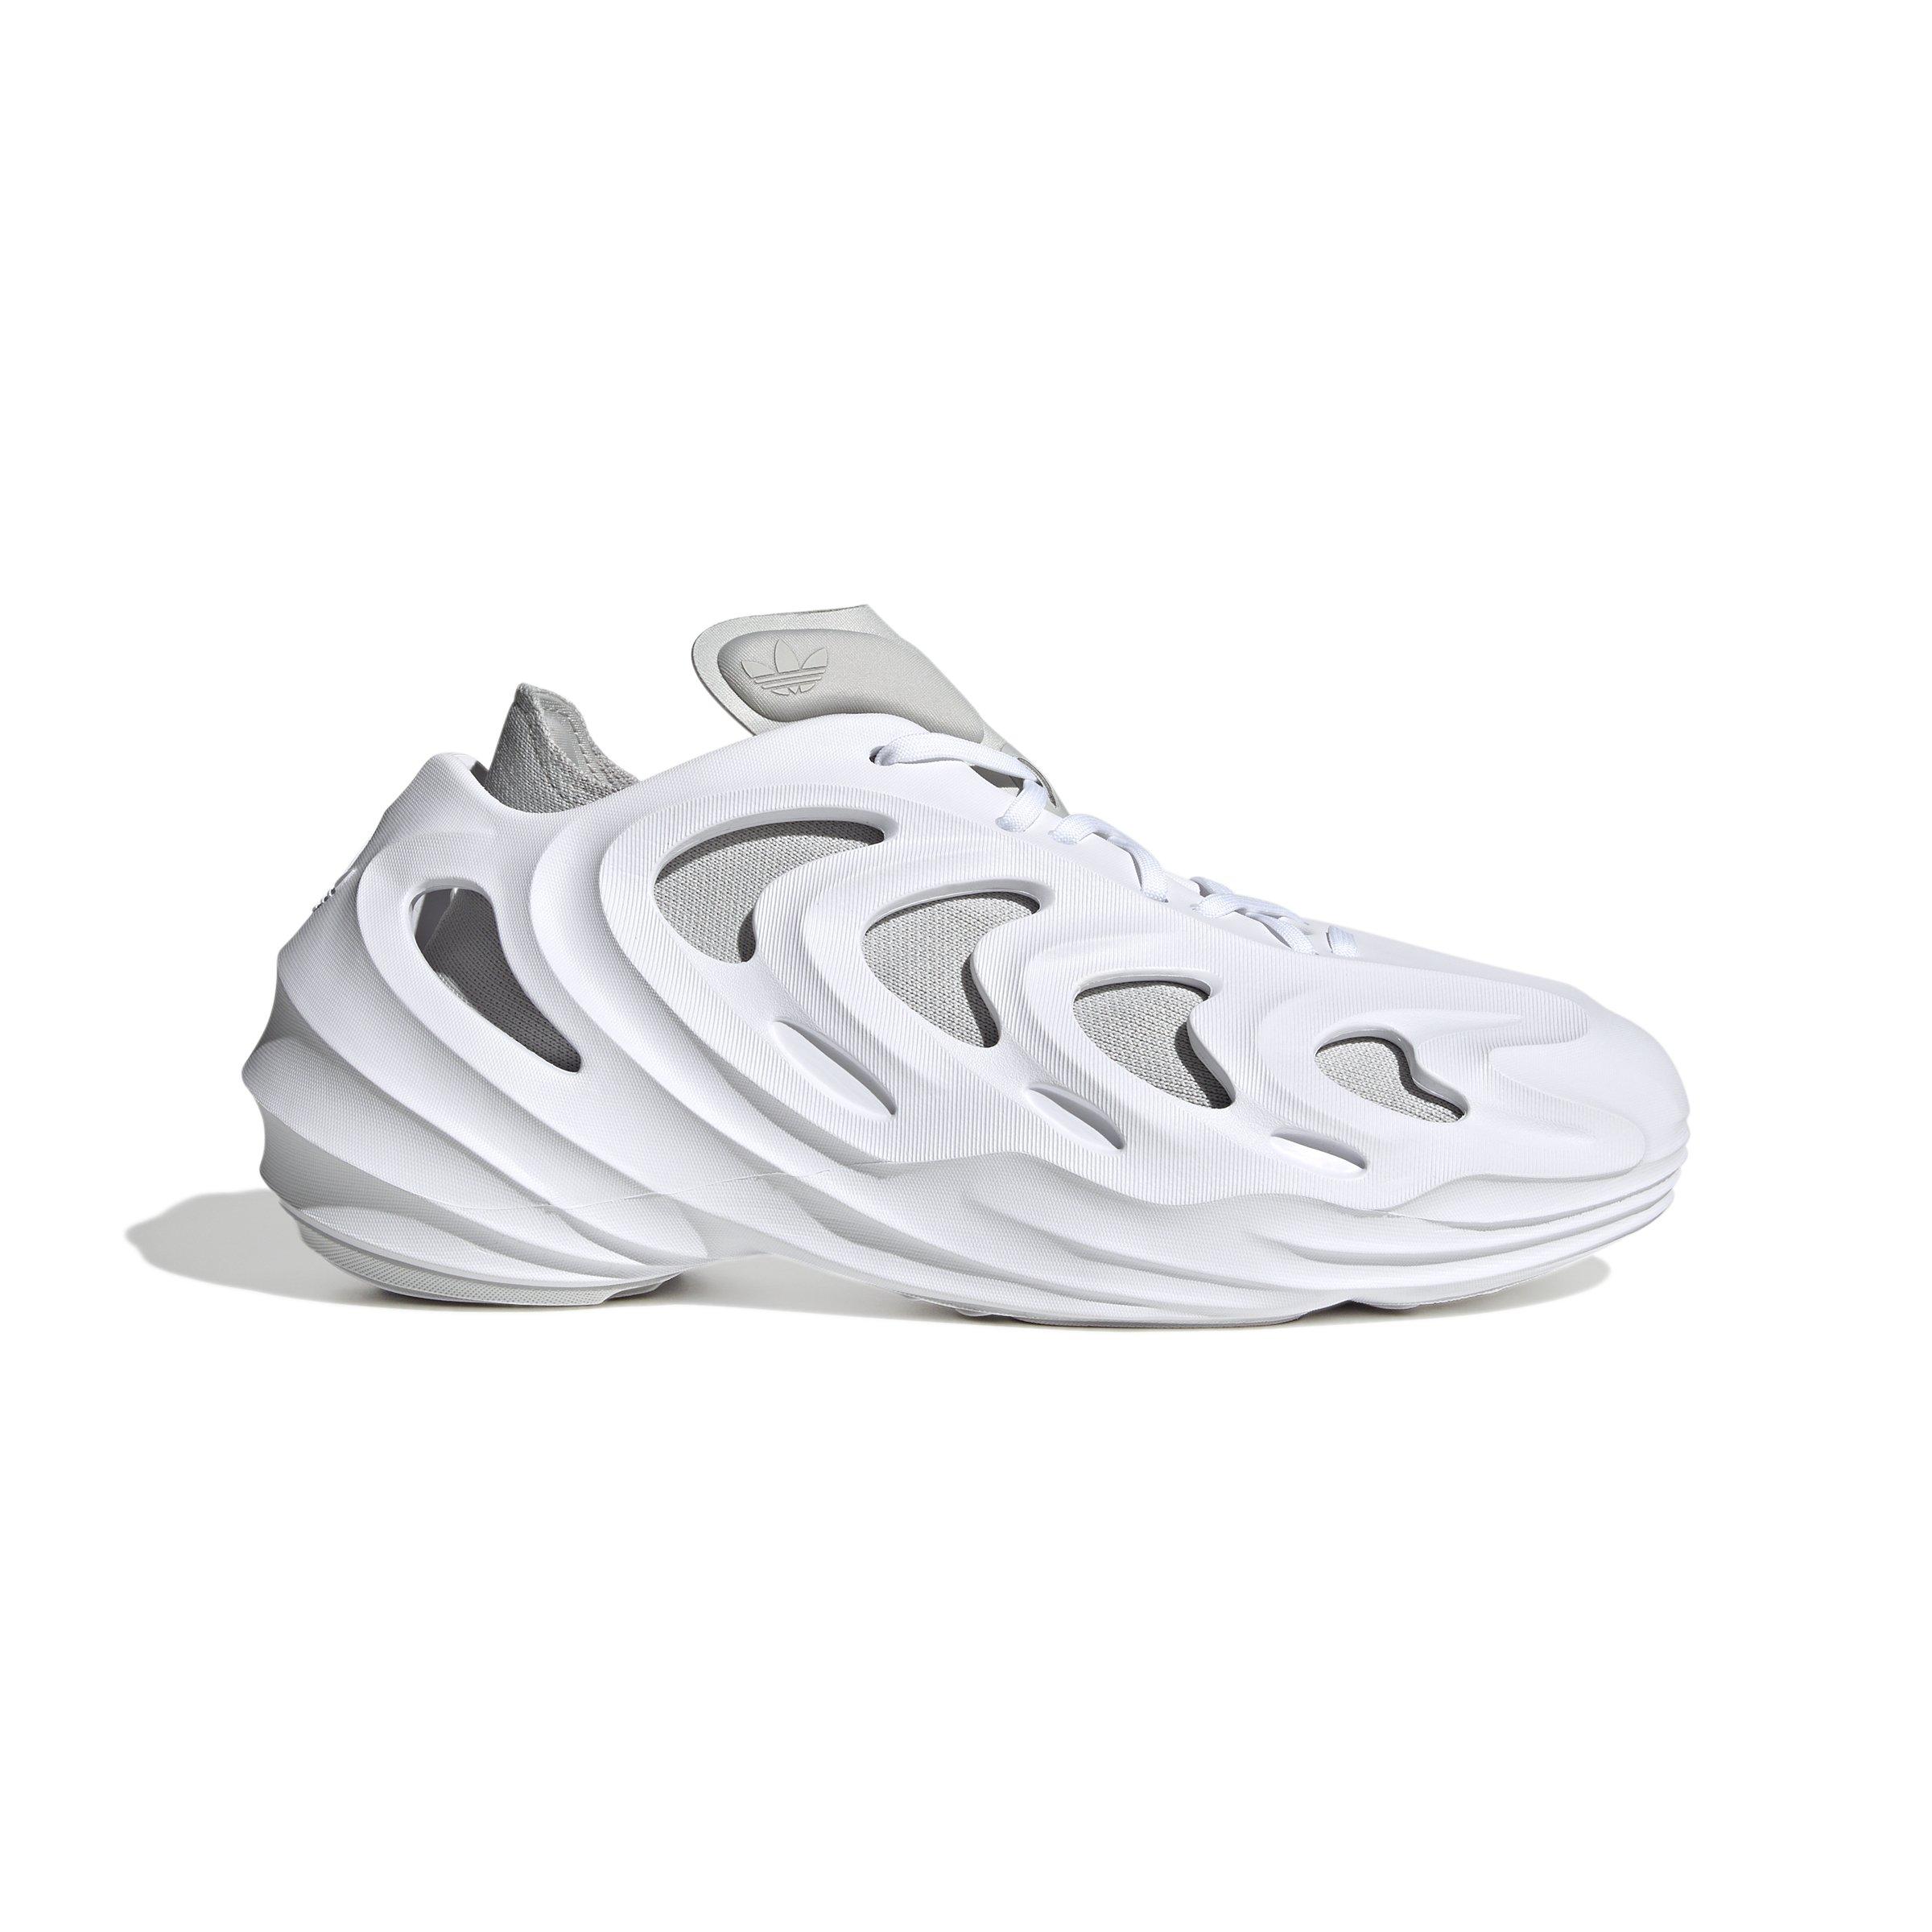 adidas adiFOM Q Off White, GY4455 Release, HotelomegaShops sneaker blog